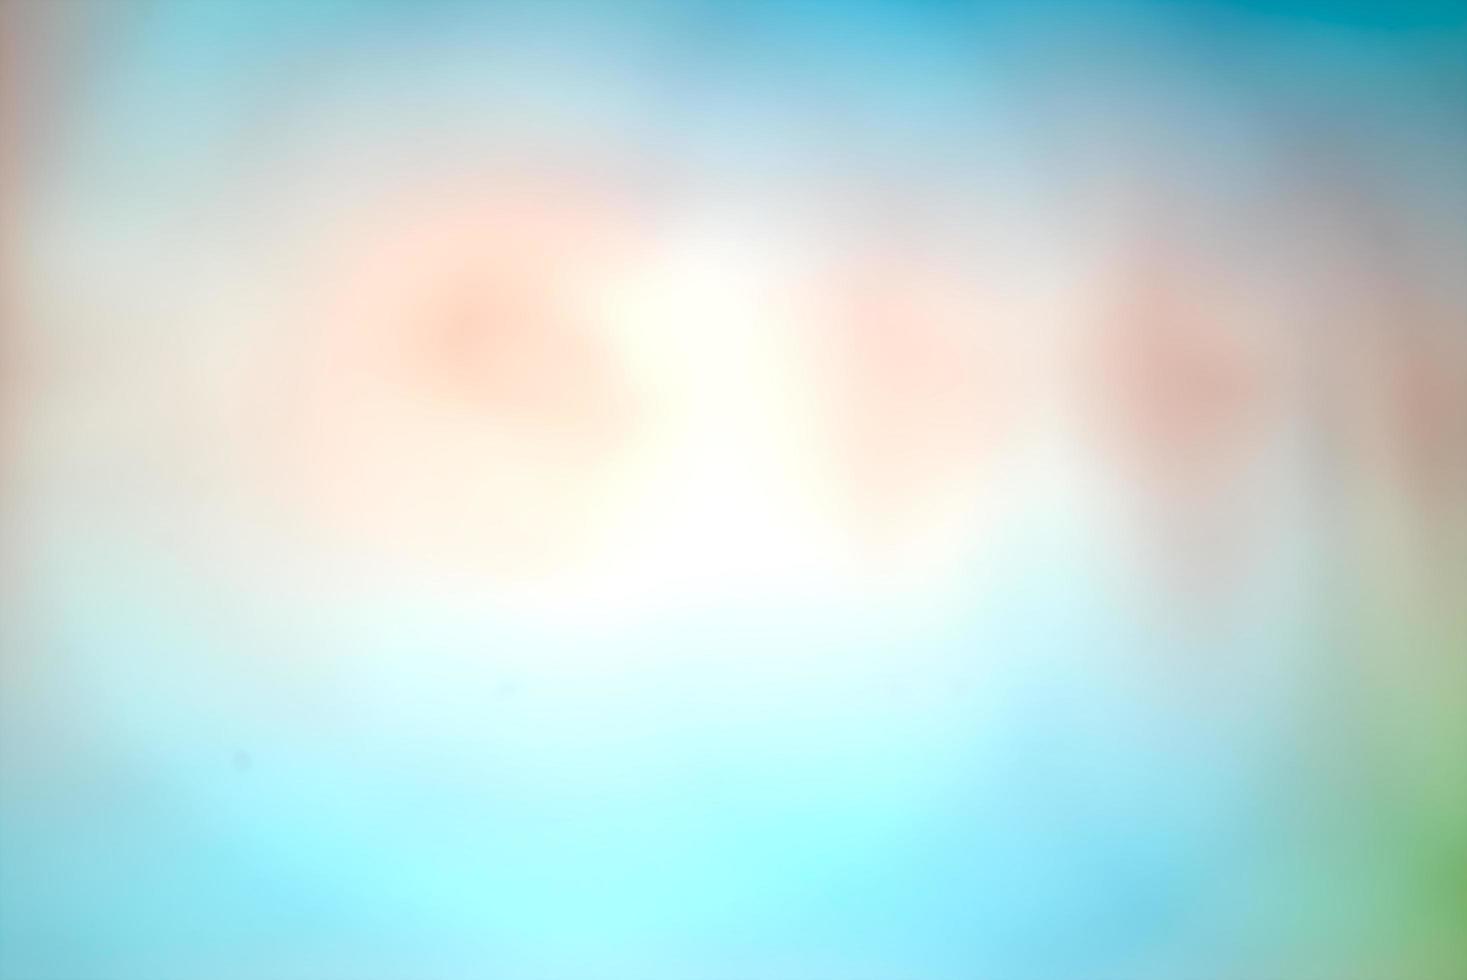 pastel azul claro desfocado, cores gradientes marrons textura de fundo abstrato foto